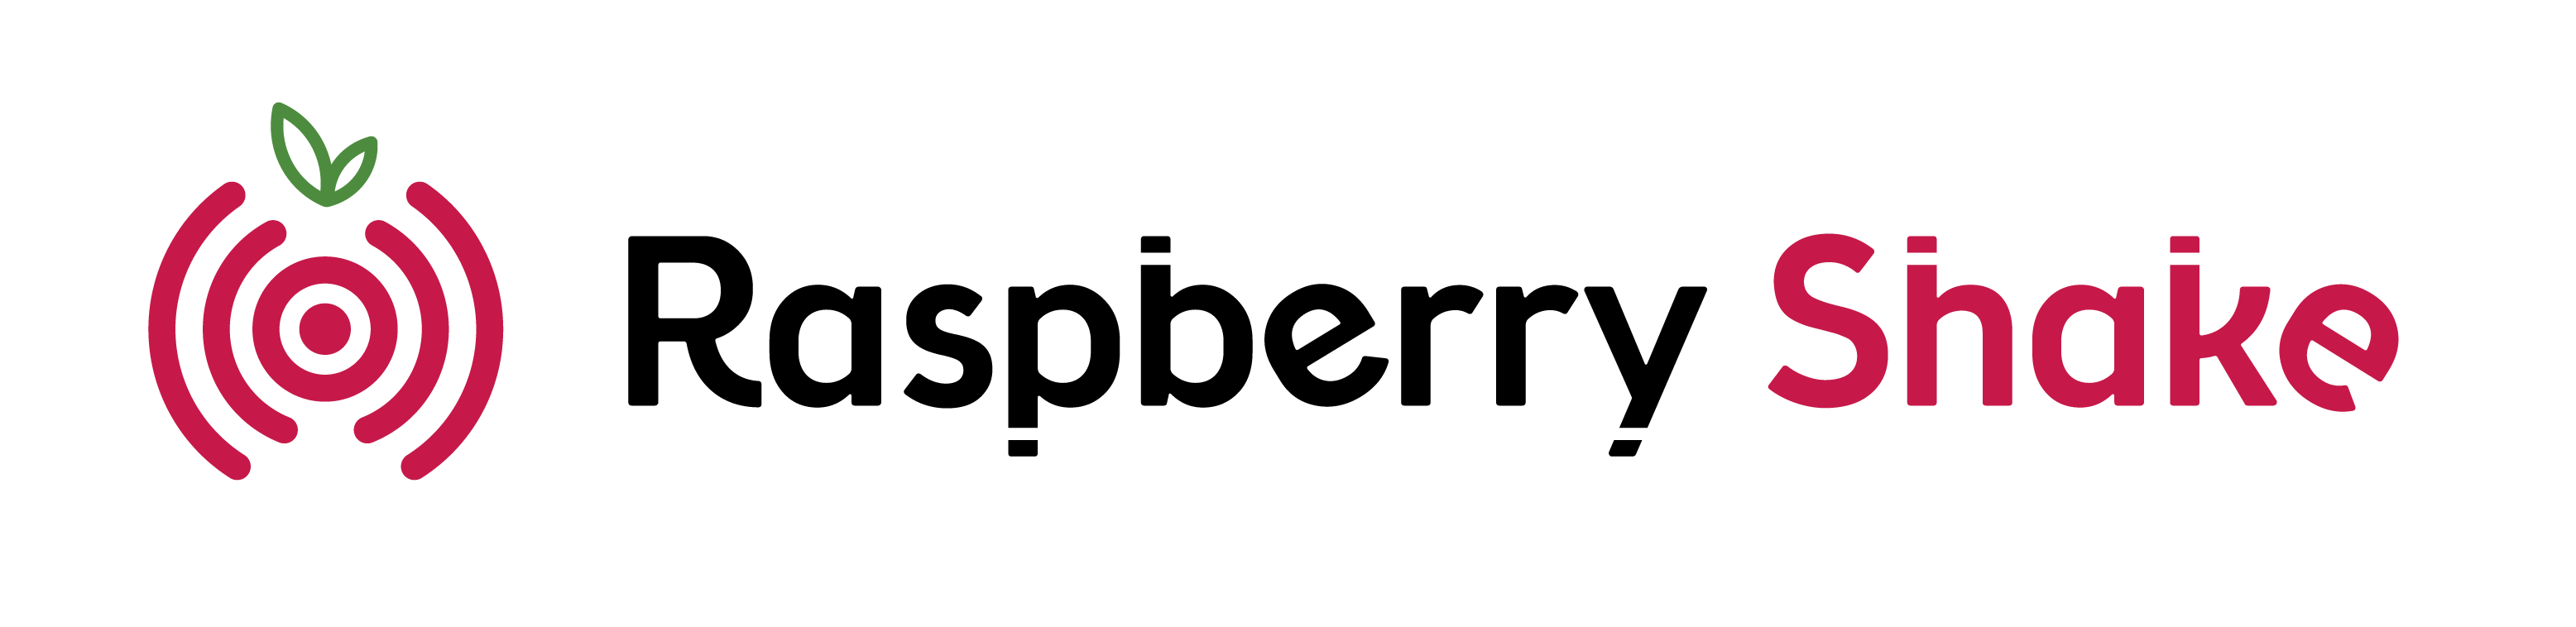 Raspi logo